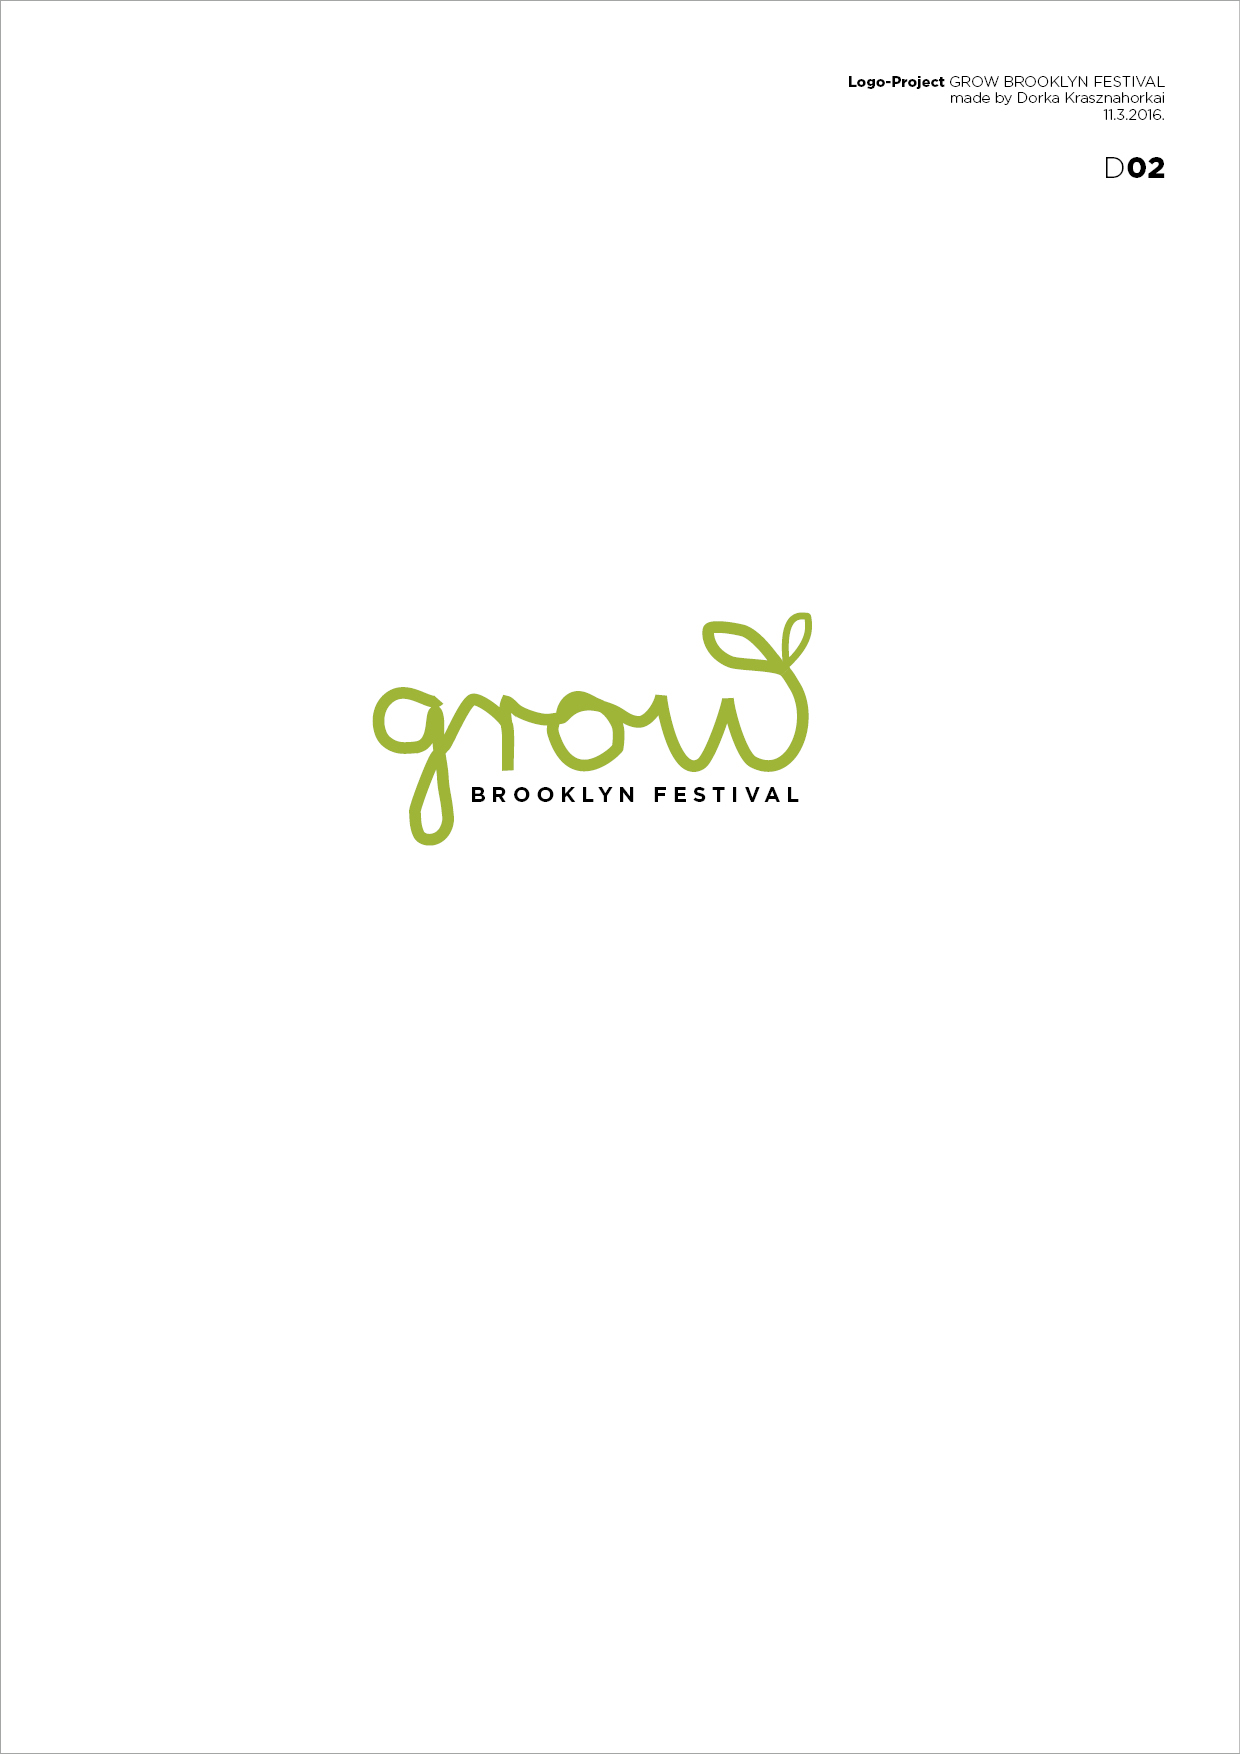 Logo-GROW-Festival-drafts3